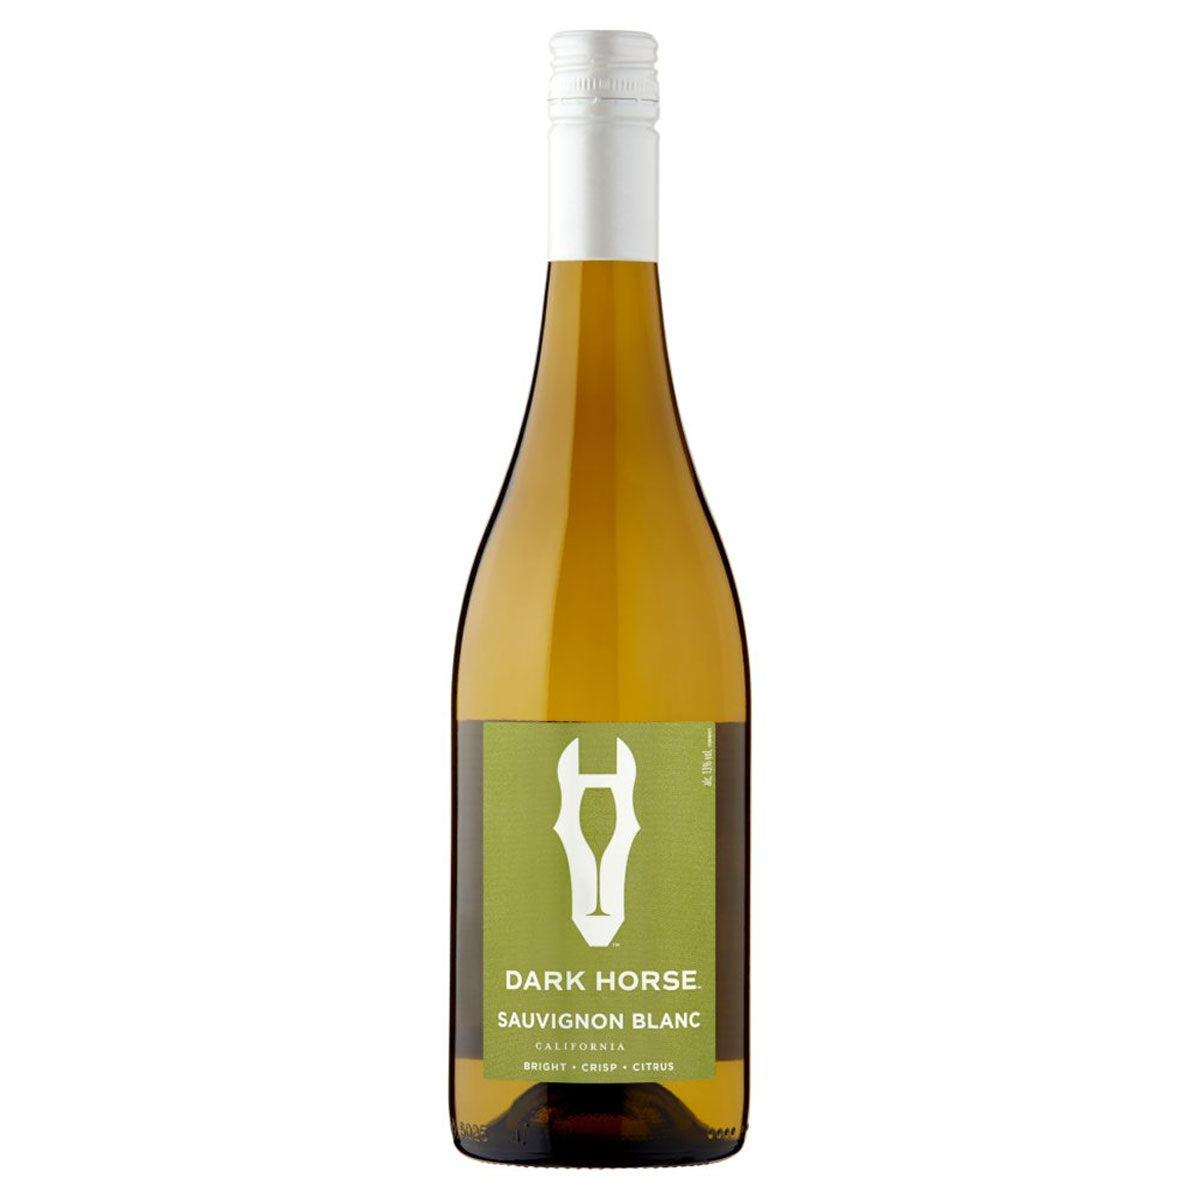 A bottle of Dark Horse - Sauvignon Blanc White Wine (13% ABV) - 750ml on a white background.